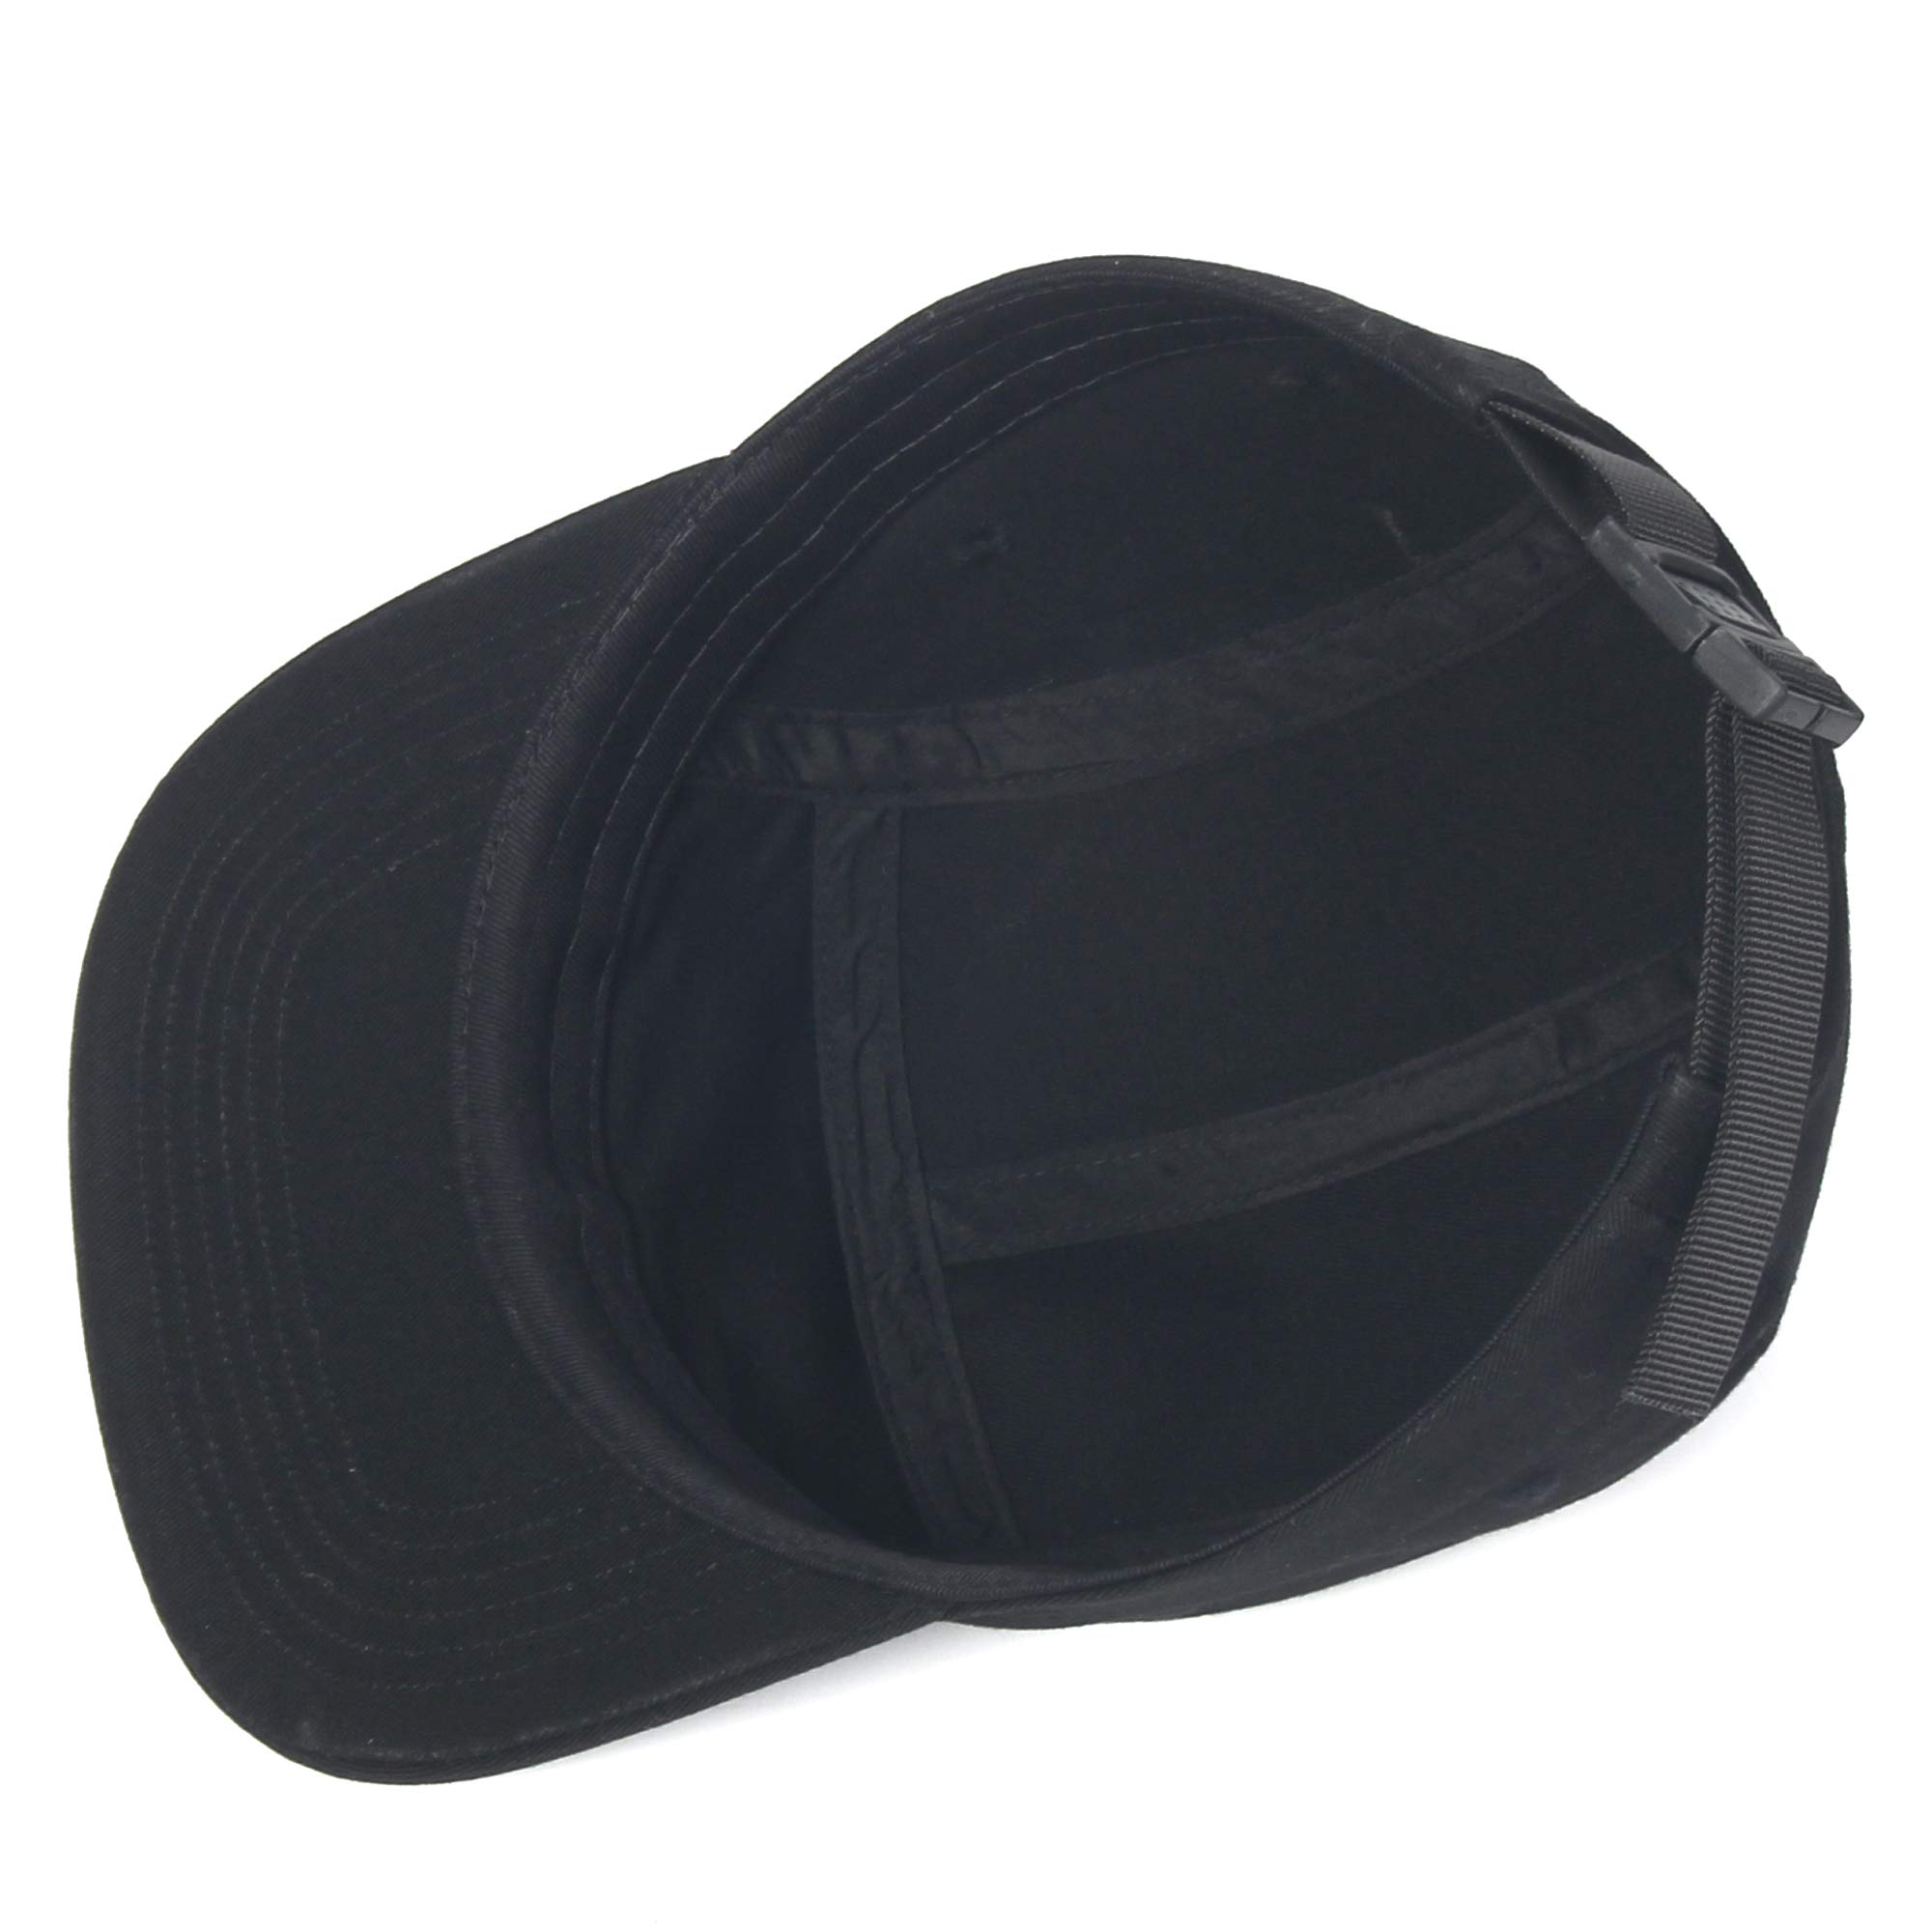 DongKing 5 Panels Baseball Cap Classic Flat Bill Hat Cotton Short Flat Brim Caps (Black)